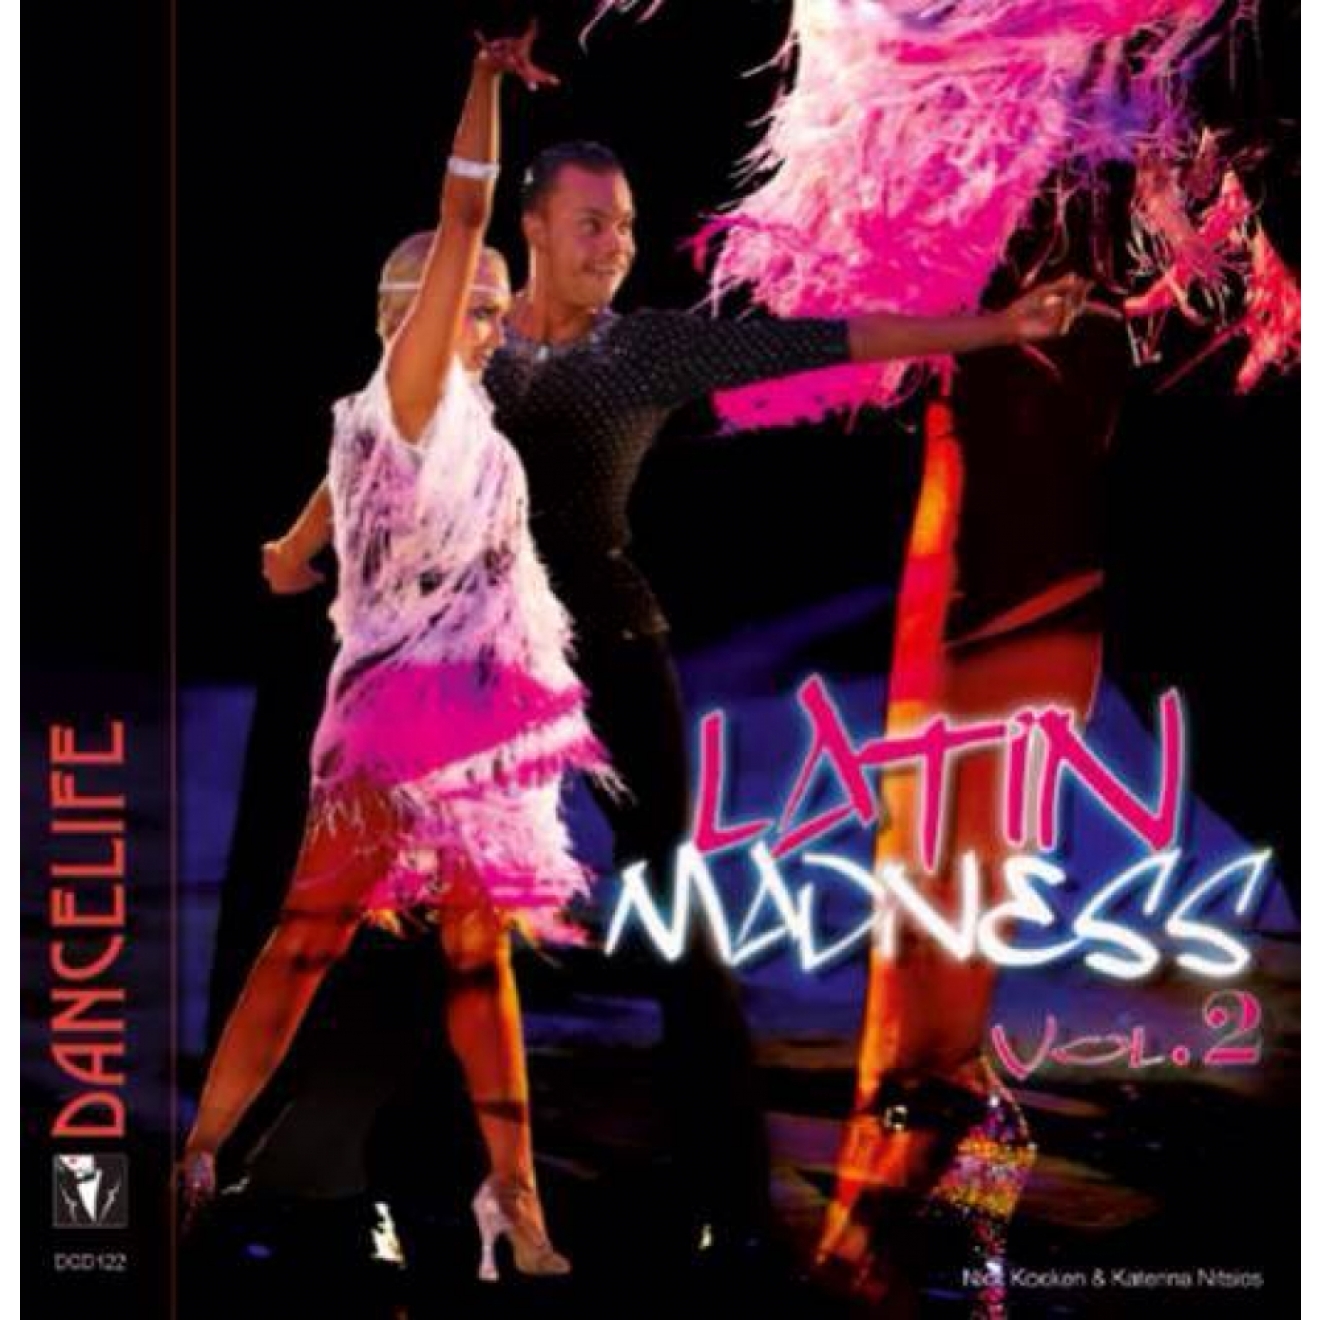 CD Dancelife: Latin Madness 2